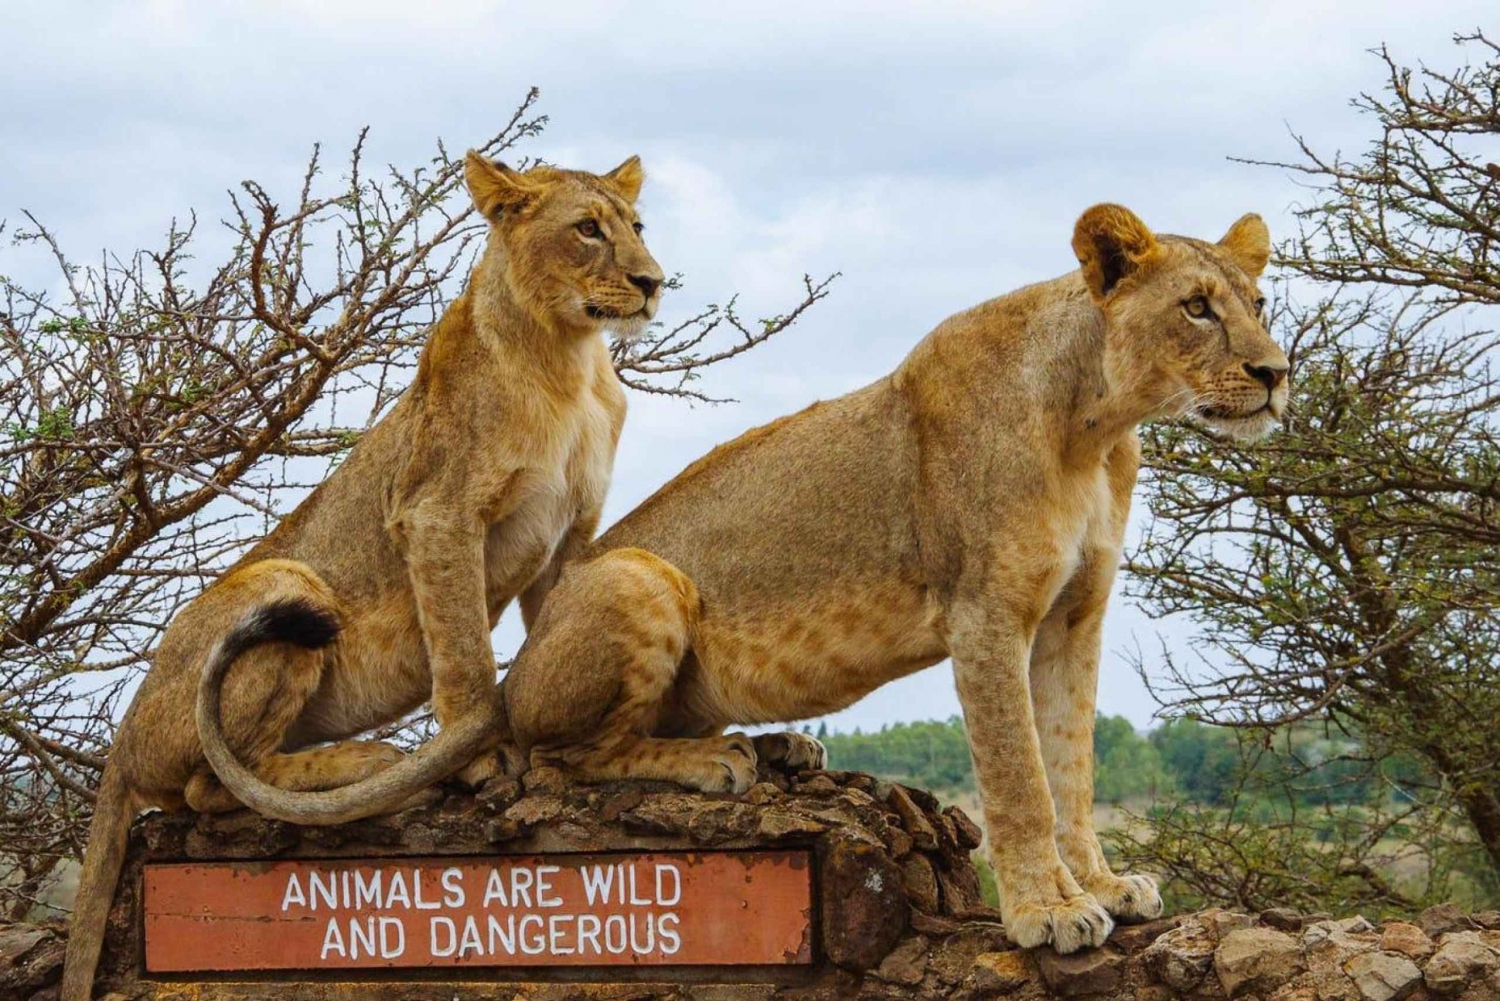 Nairobi National Park, Elephant & Bomas of Kenya Adventure